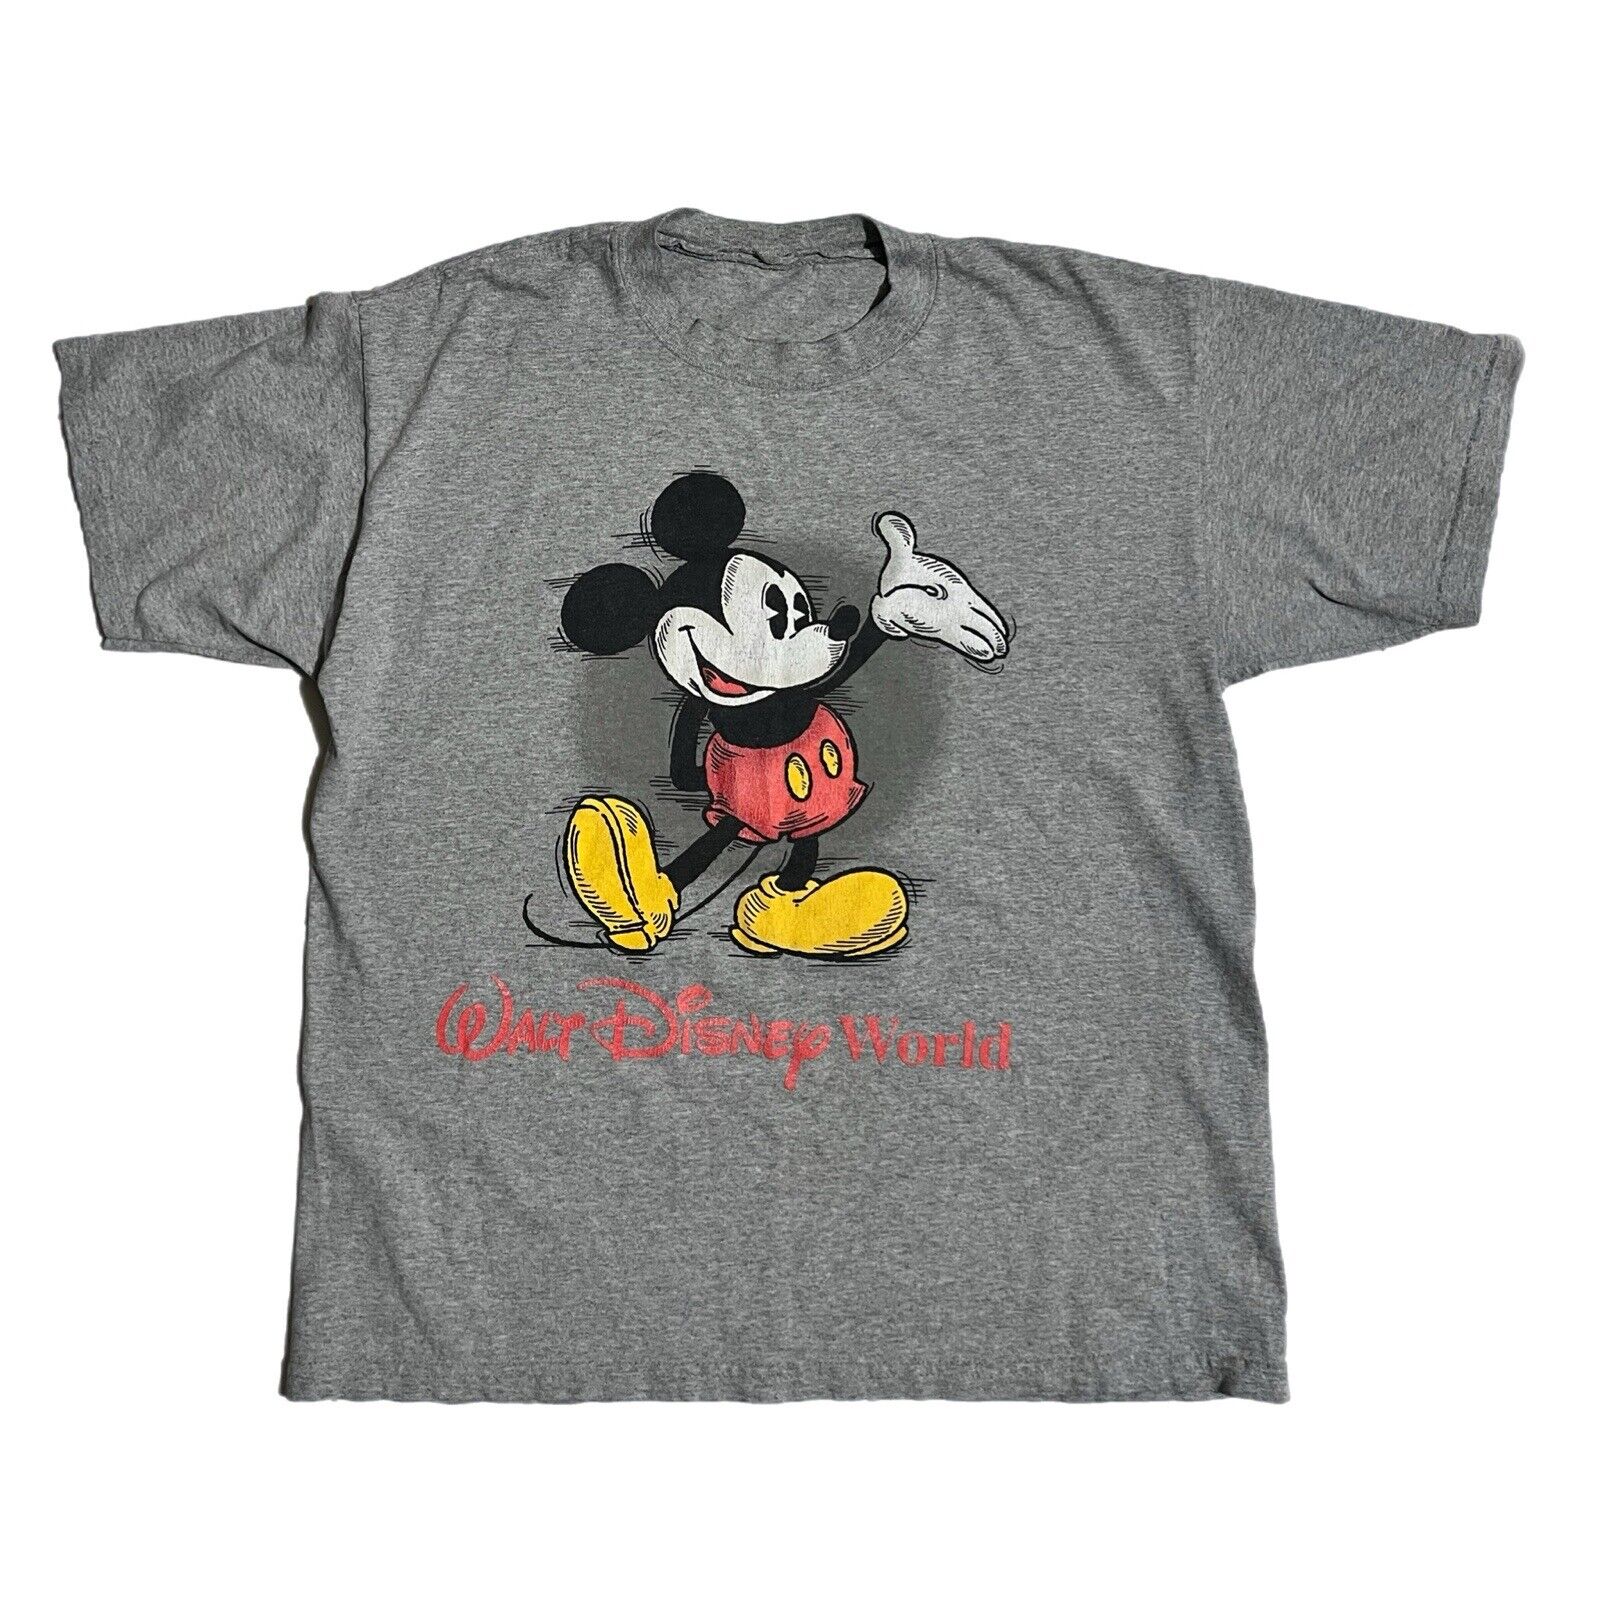 Vintage 90s Mickey Mouse Disney World T-Shirt Men’s XL